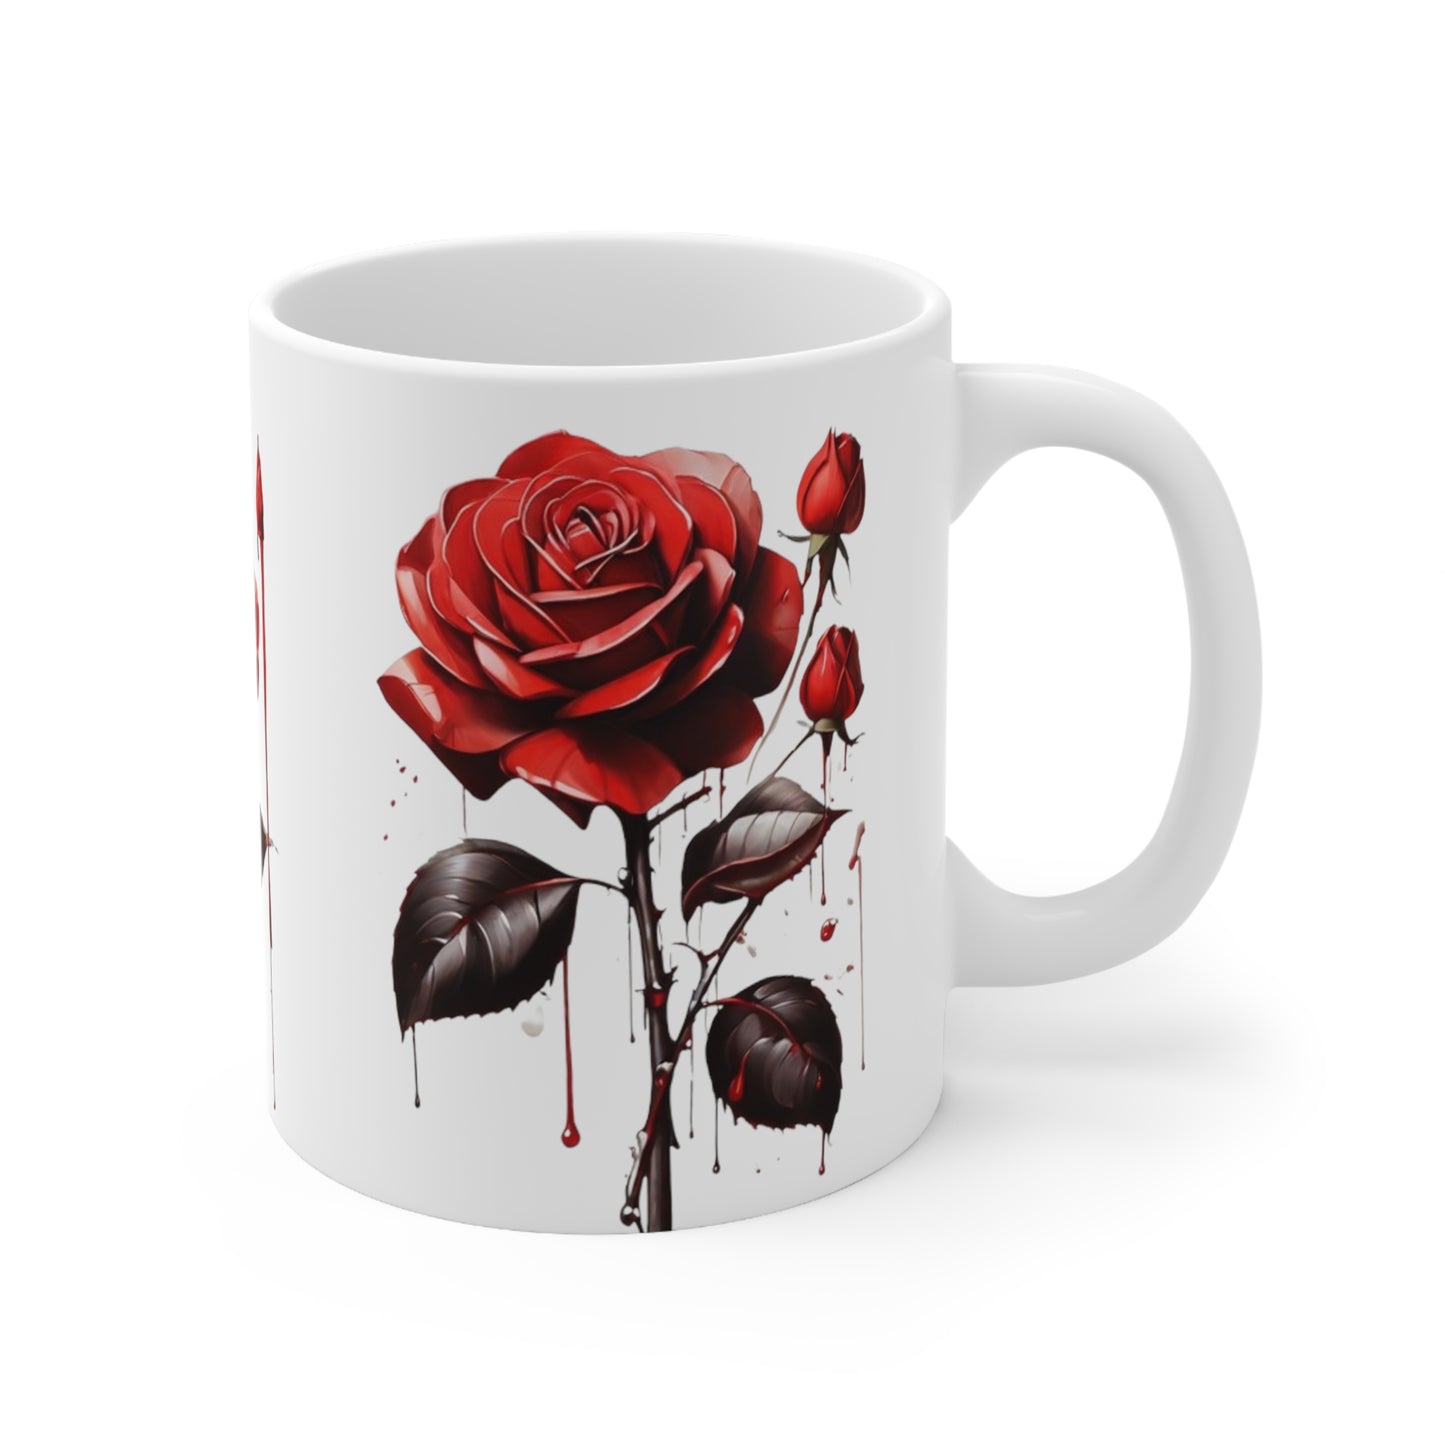 Painted Red Roses Mug - Ceramic Coffee Mug 11oz